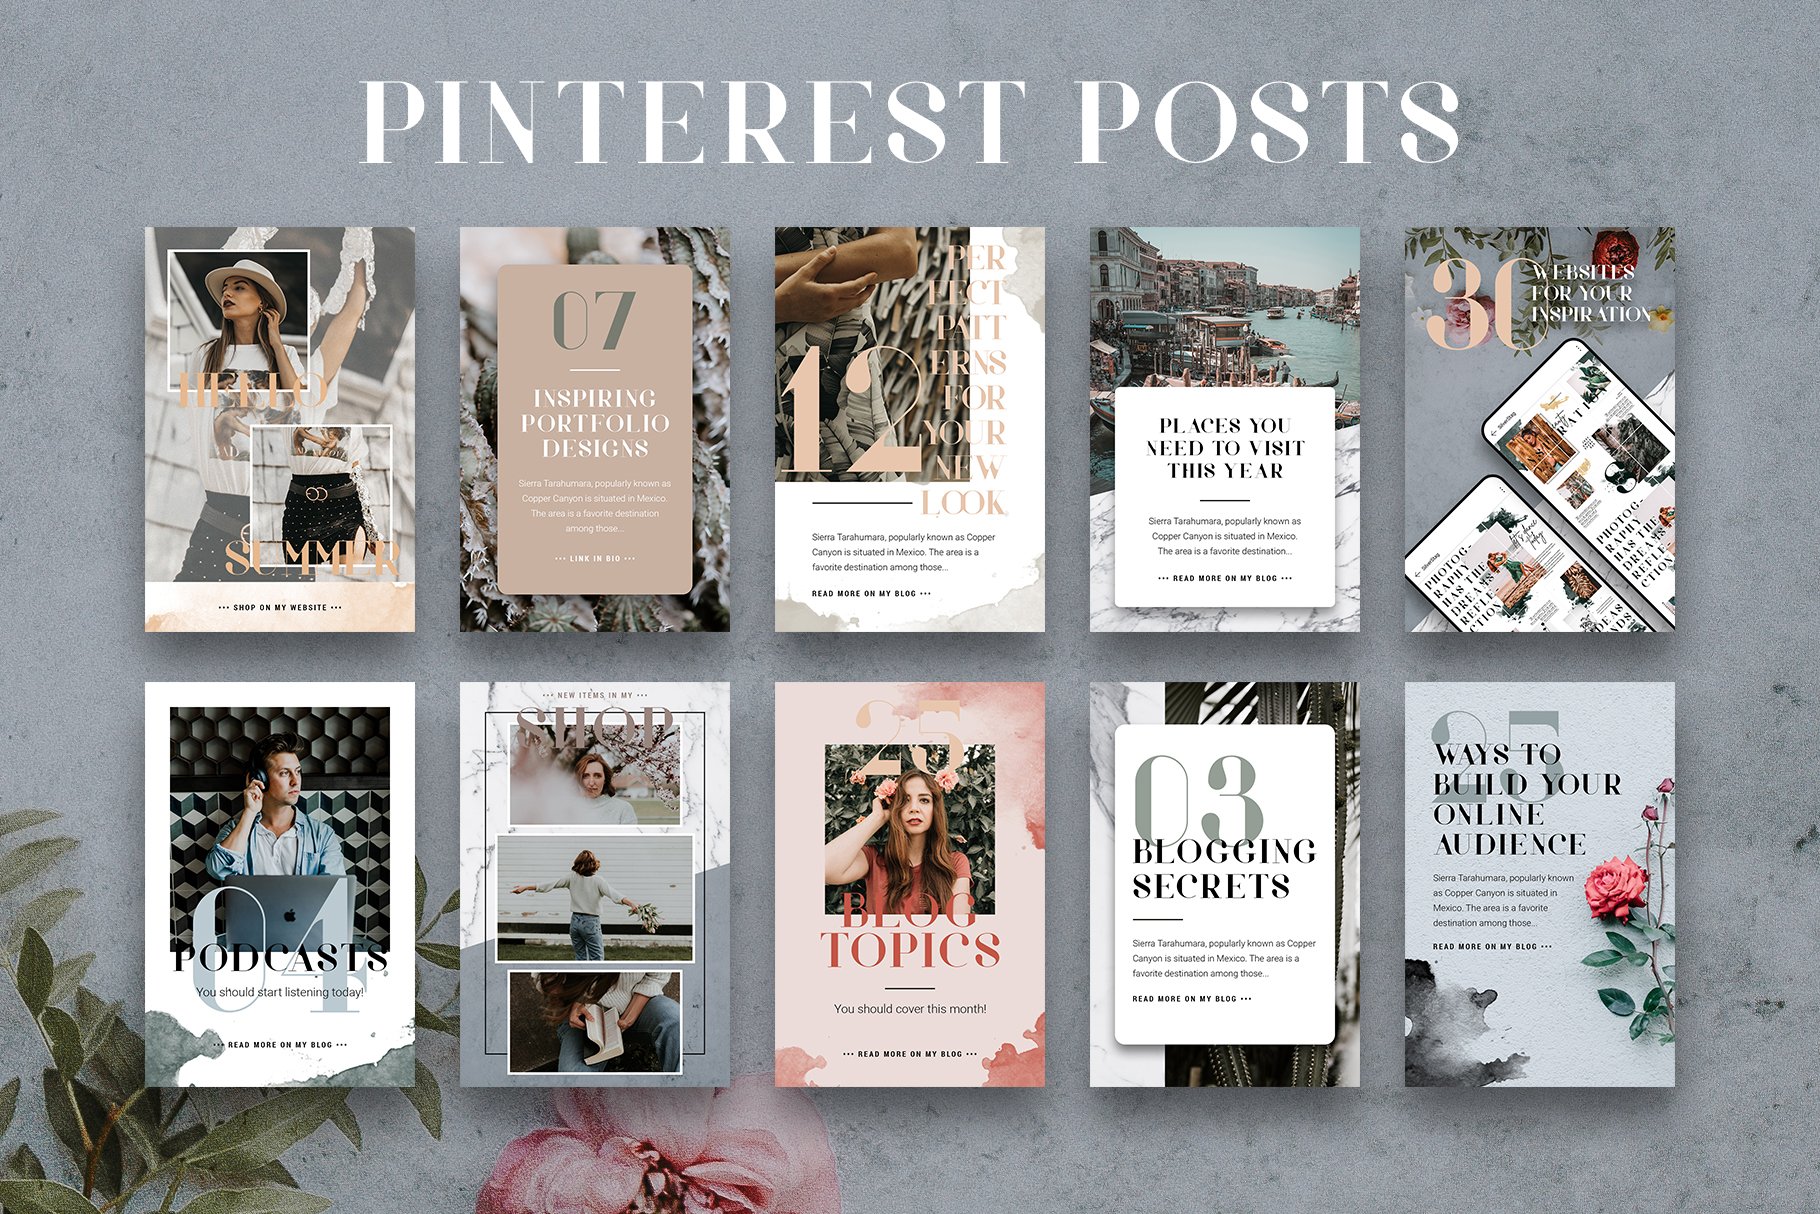 Infopreneur - Pinterest Posts Pack